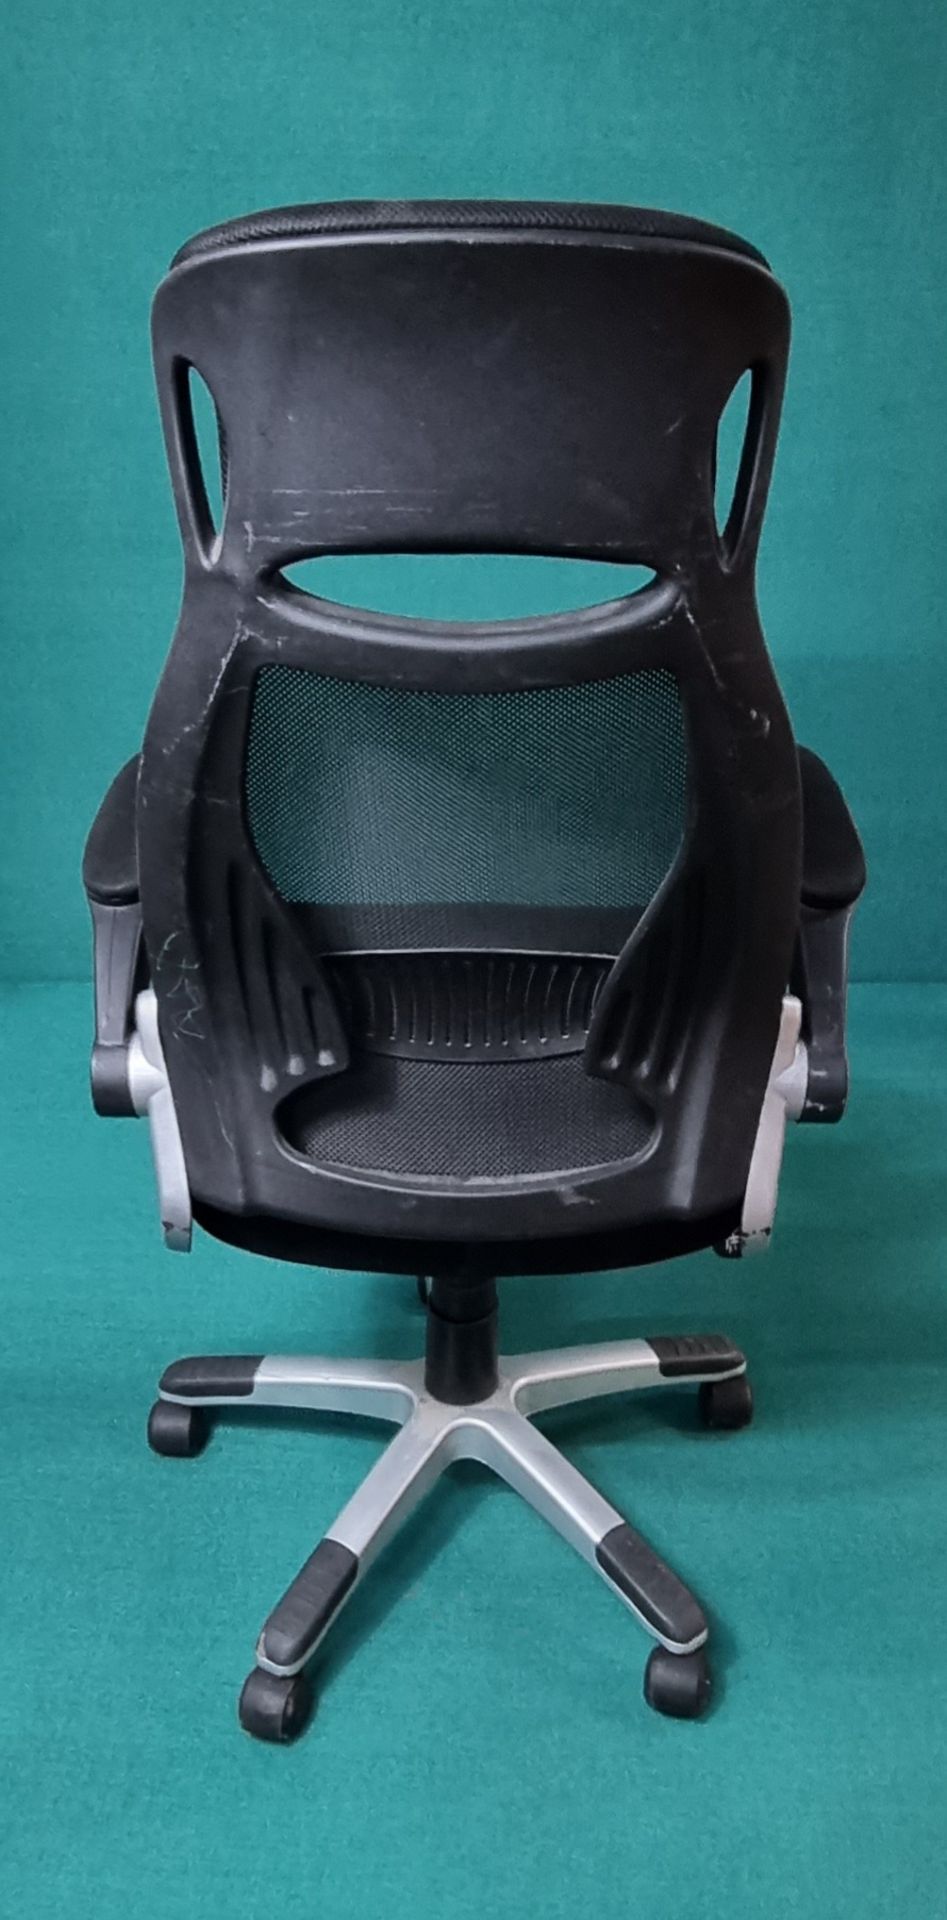 Black/Silver Adjustable Office Desk Chair - Image 4 of 4